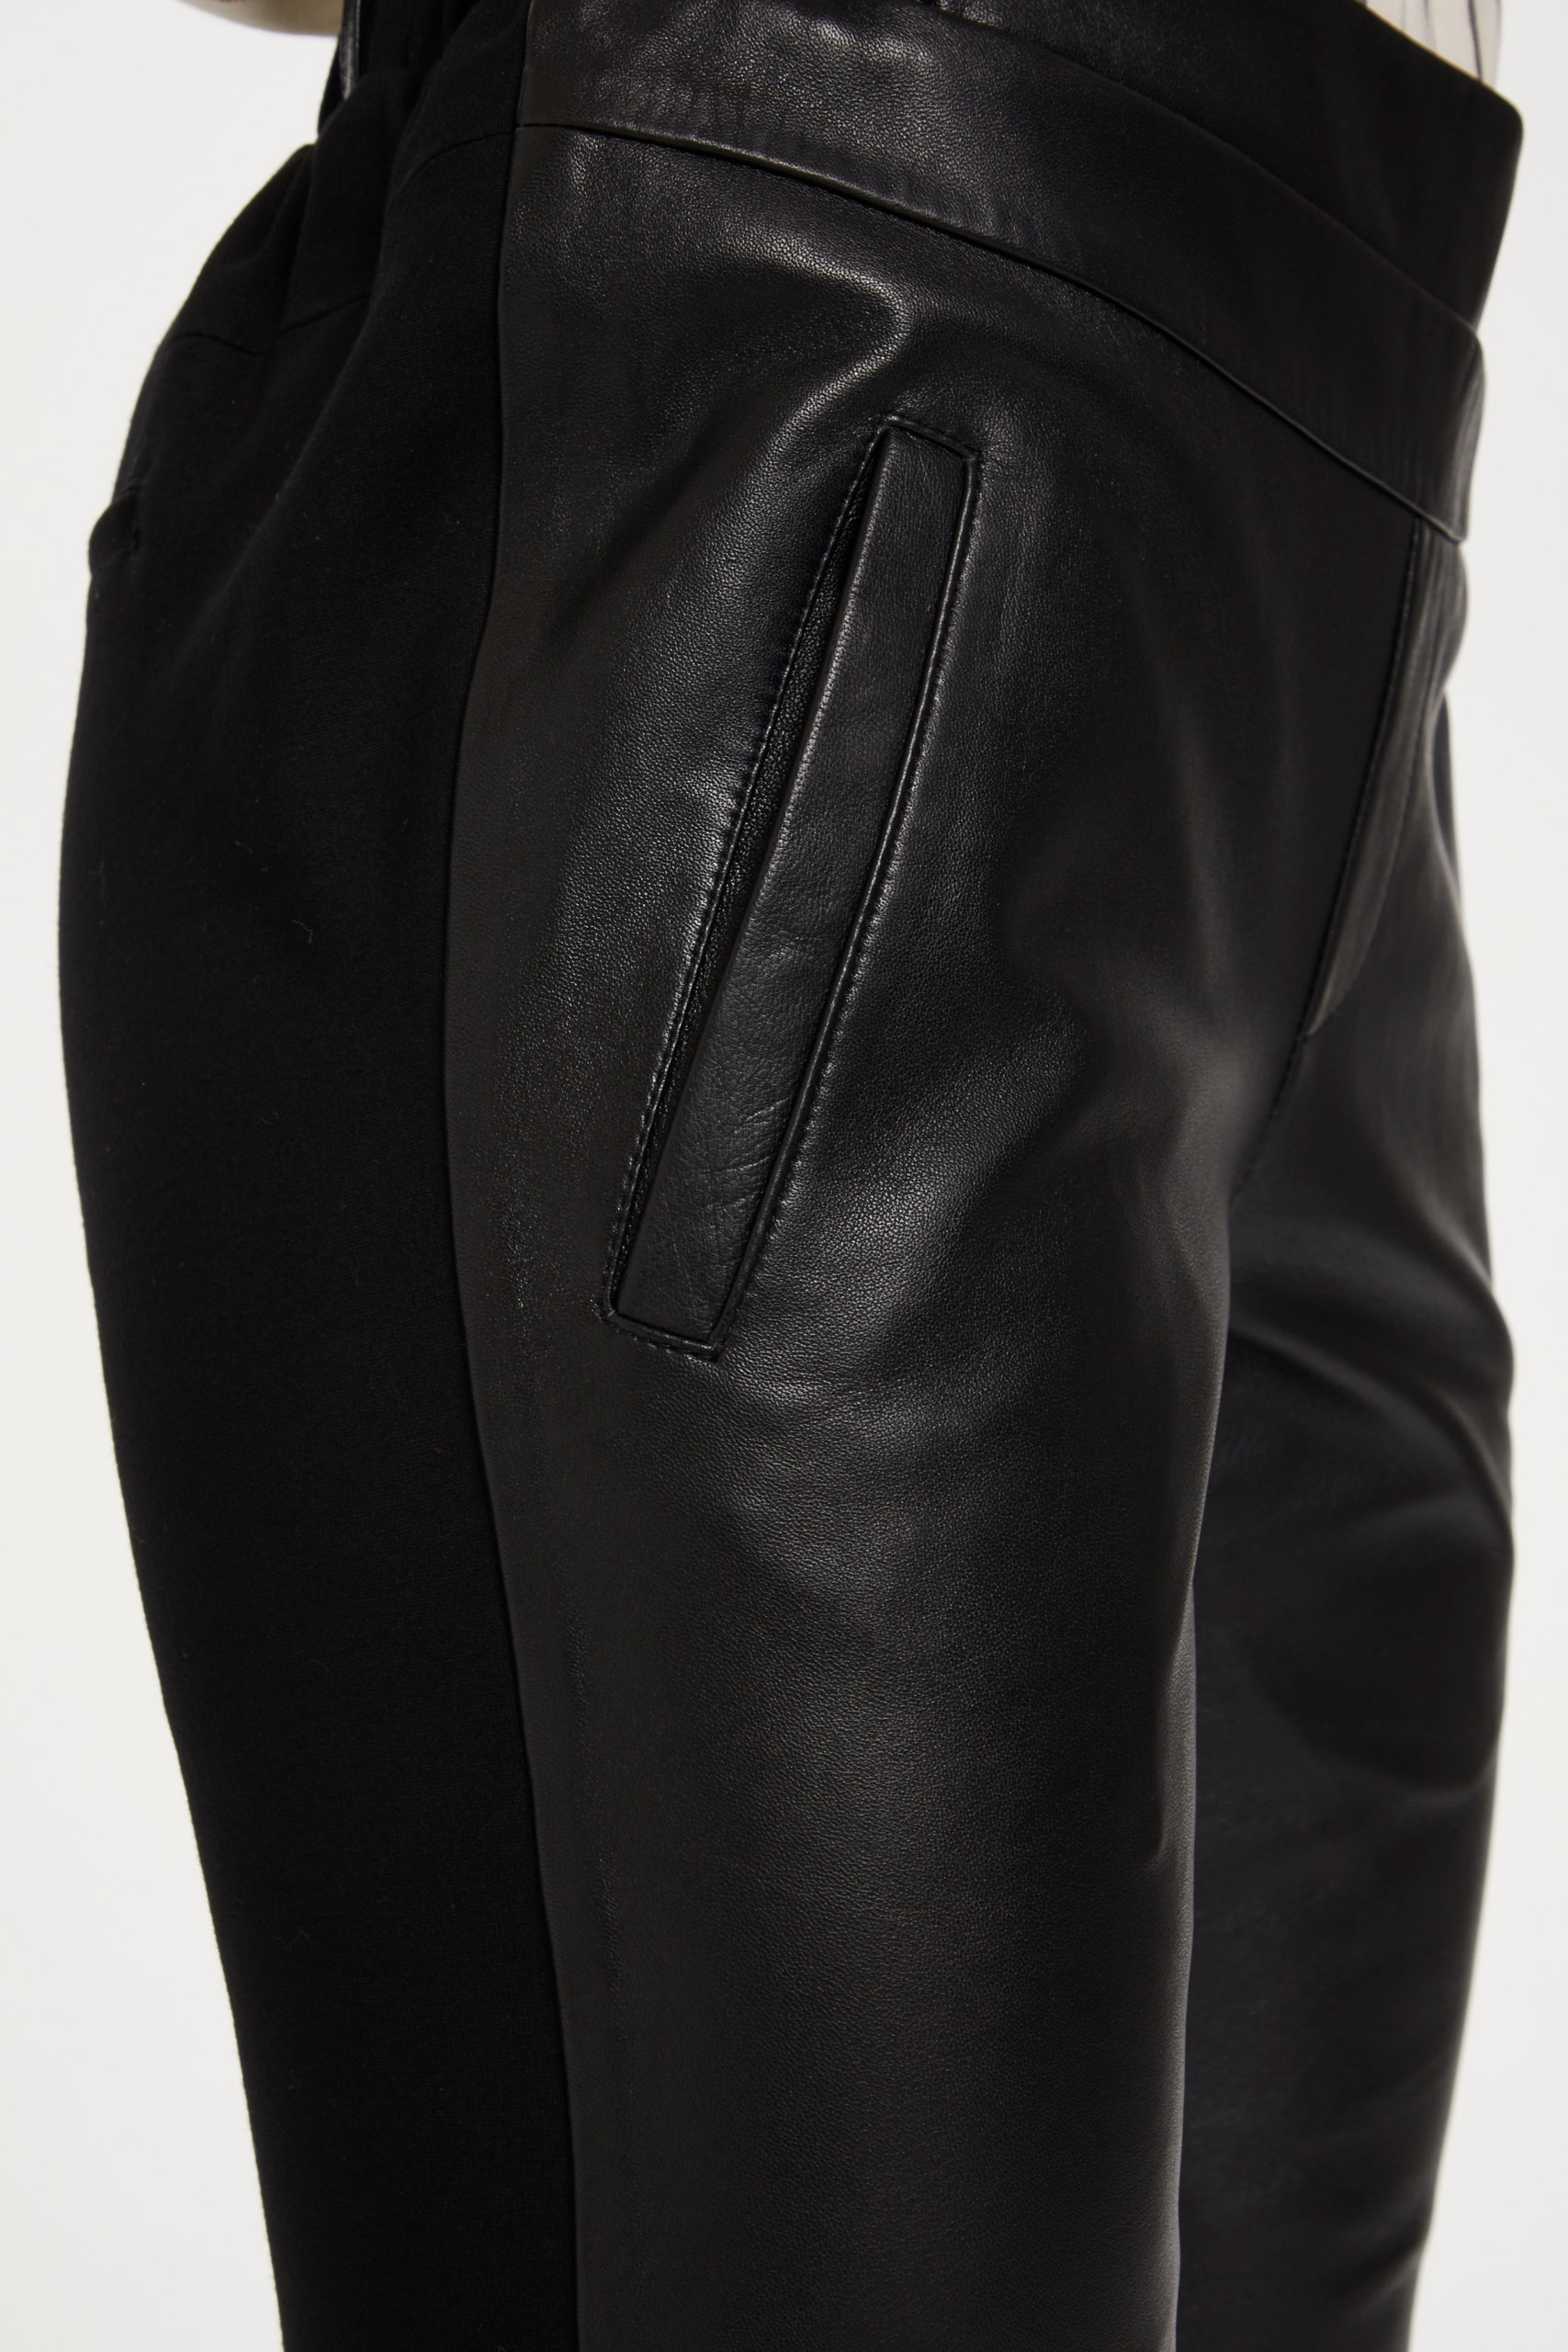 Kagia Sofie Leather Pant black closeup